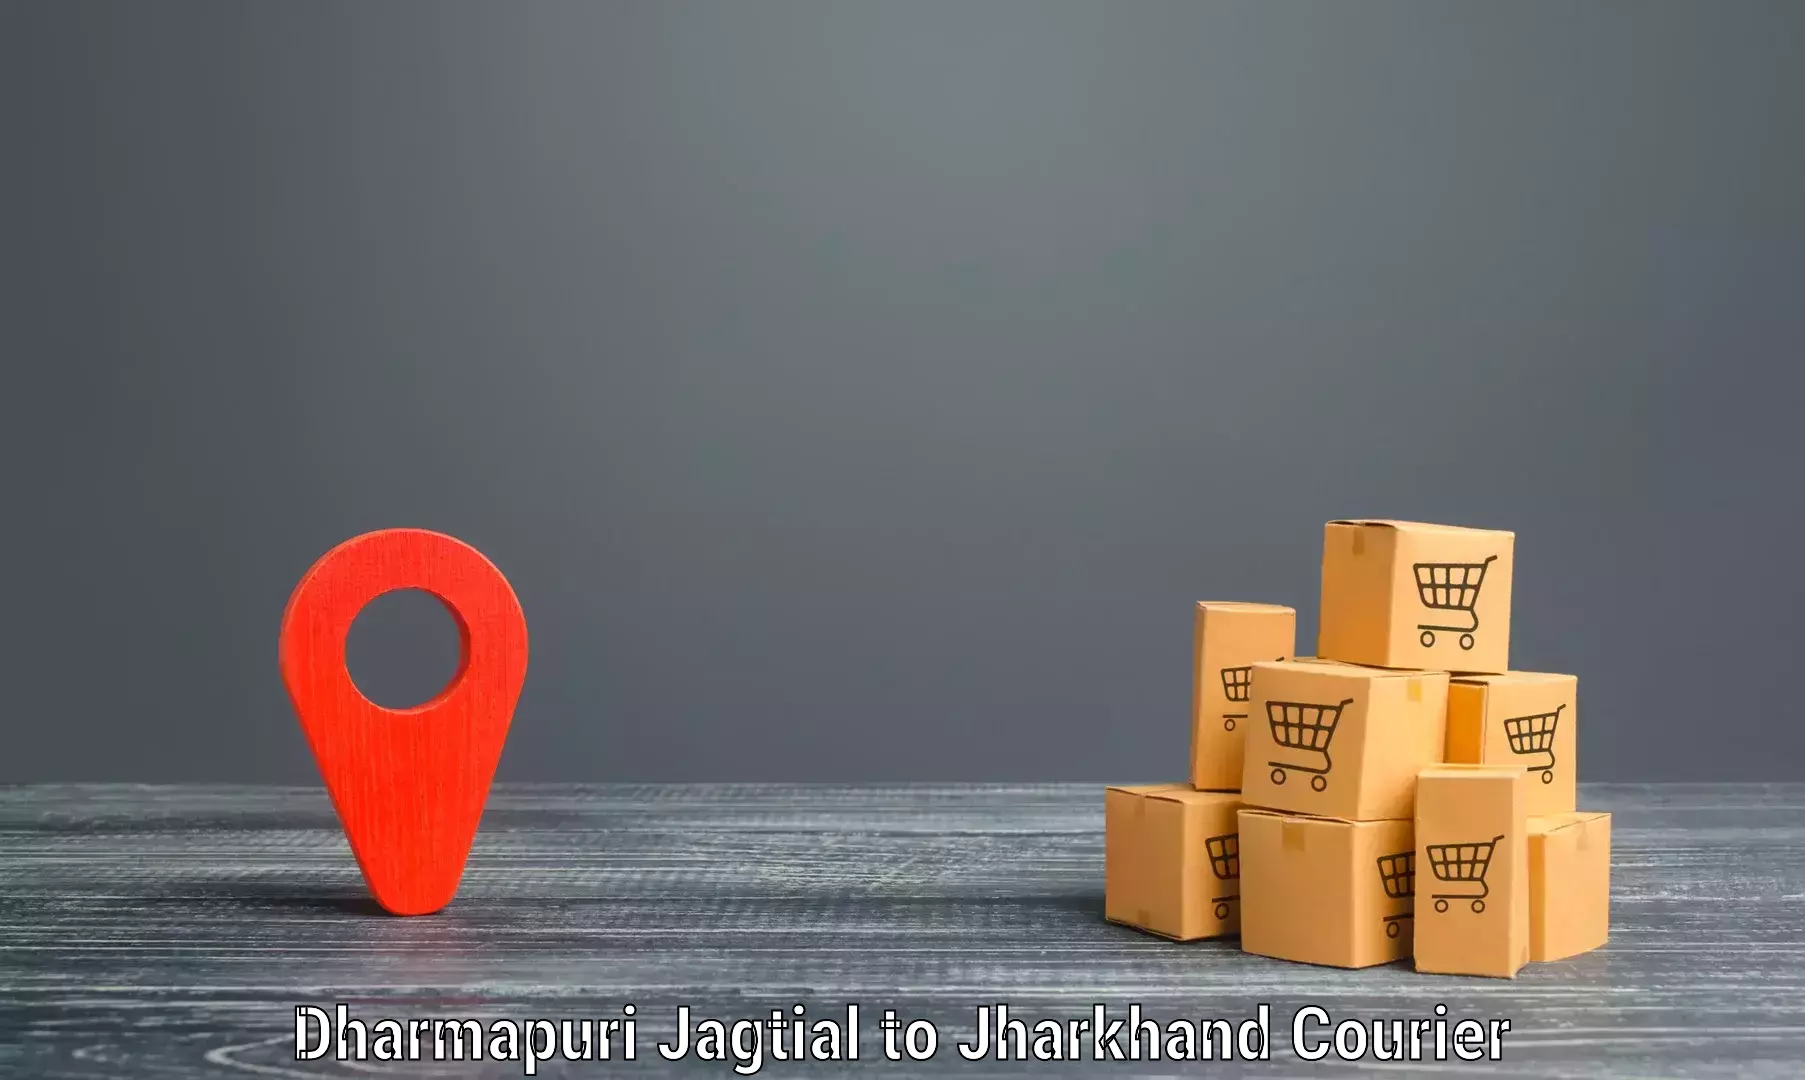 Sustainable shipping practices Dharmapuri Jagtial to Peterbar